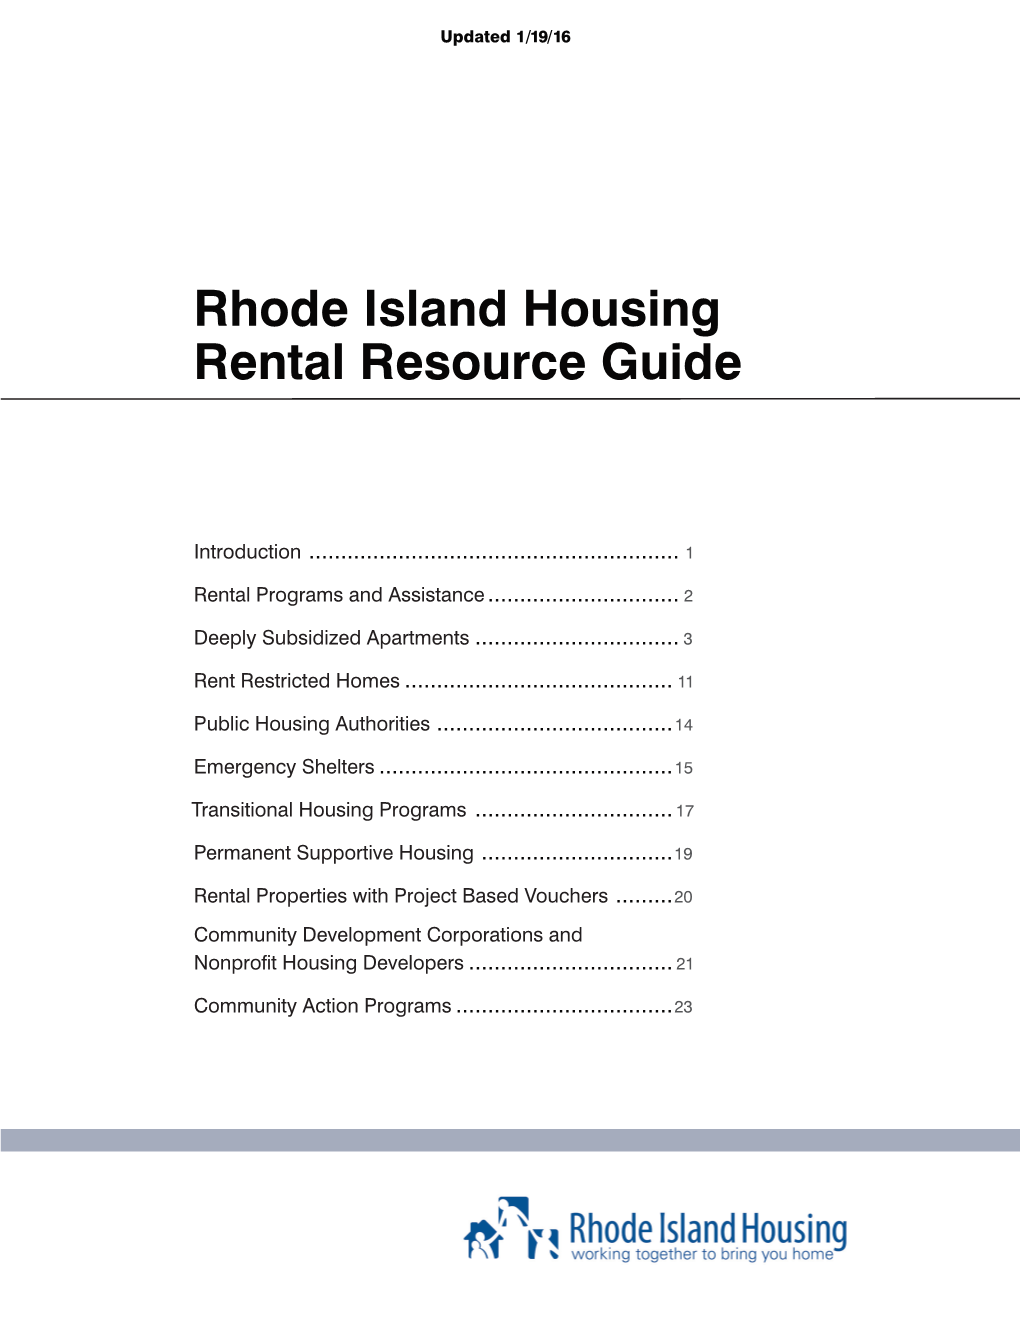 Rhode Island Housing Rental Resource Guide